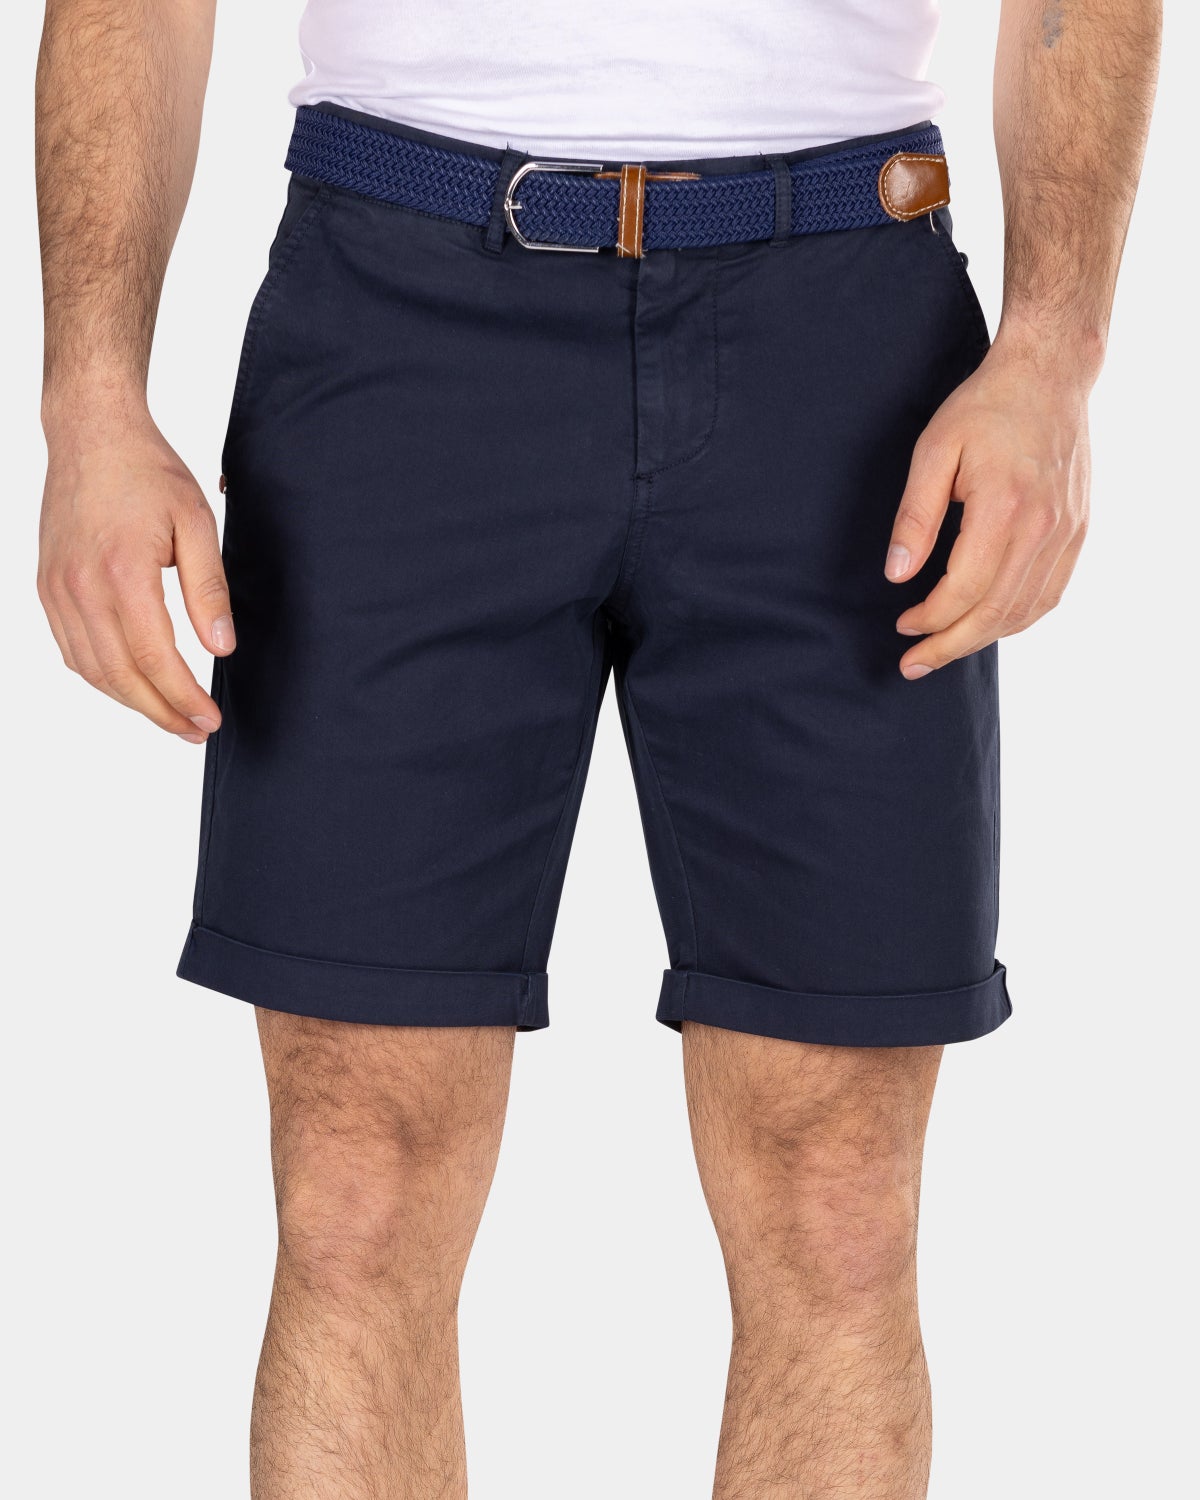 Cotton chino shorts - Traditional Navy